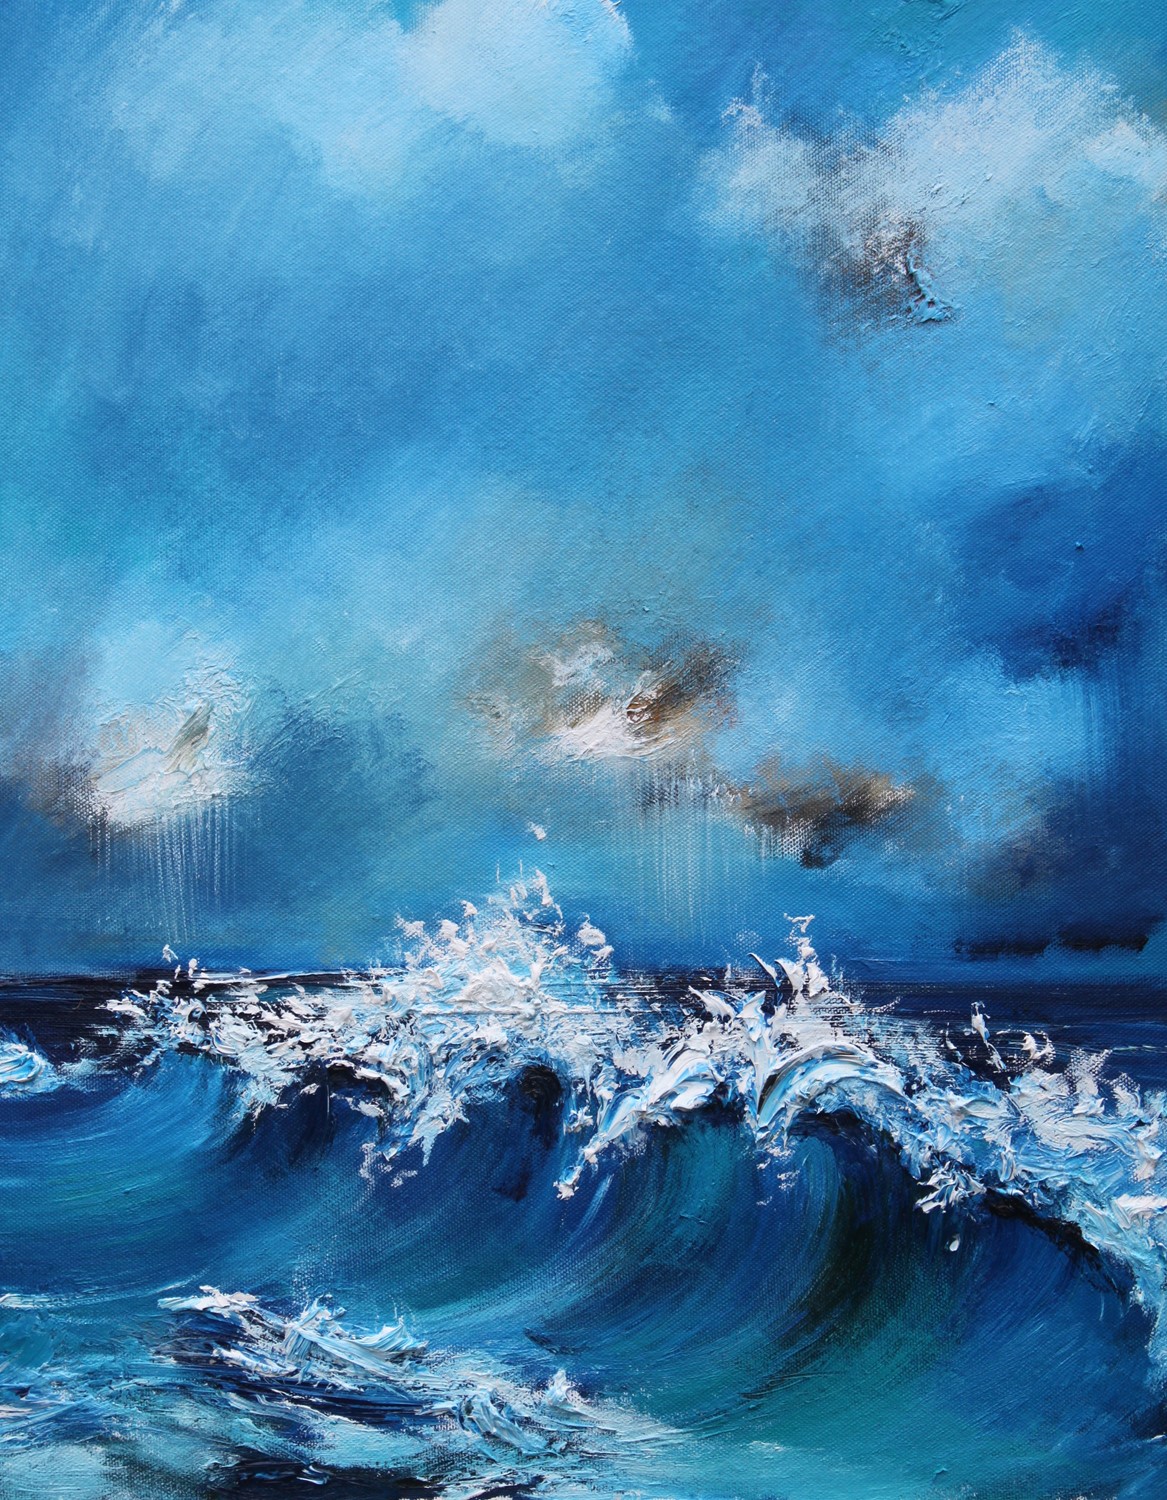 'Tumbling waves' by artist Rosanne Barr